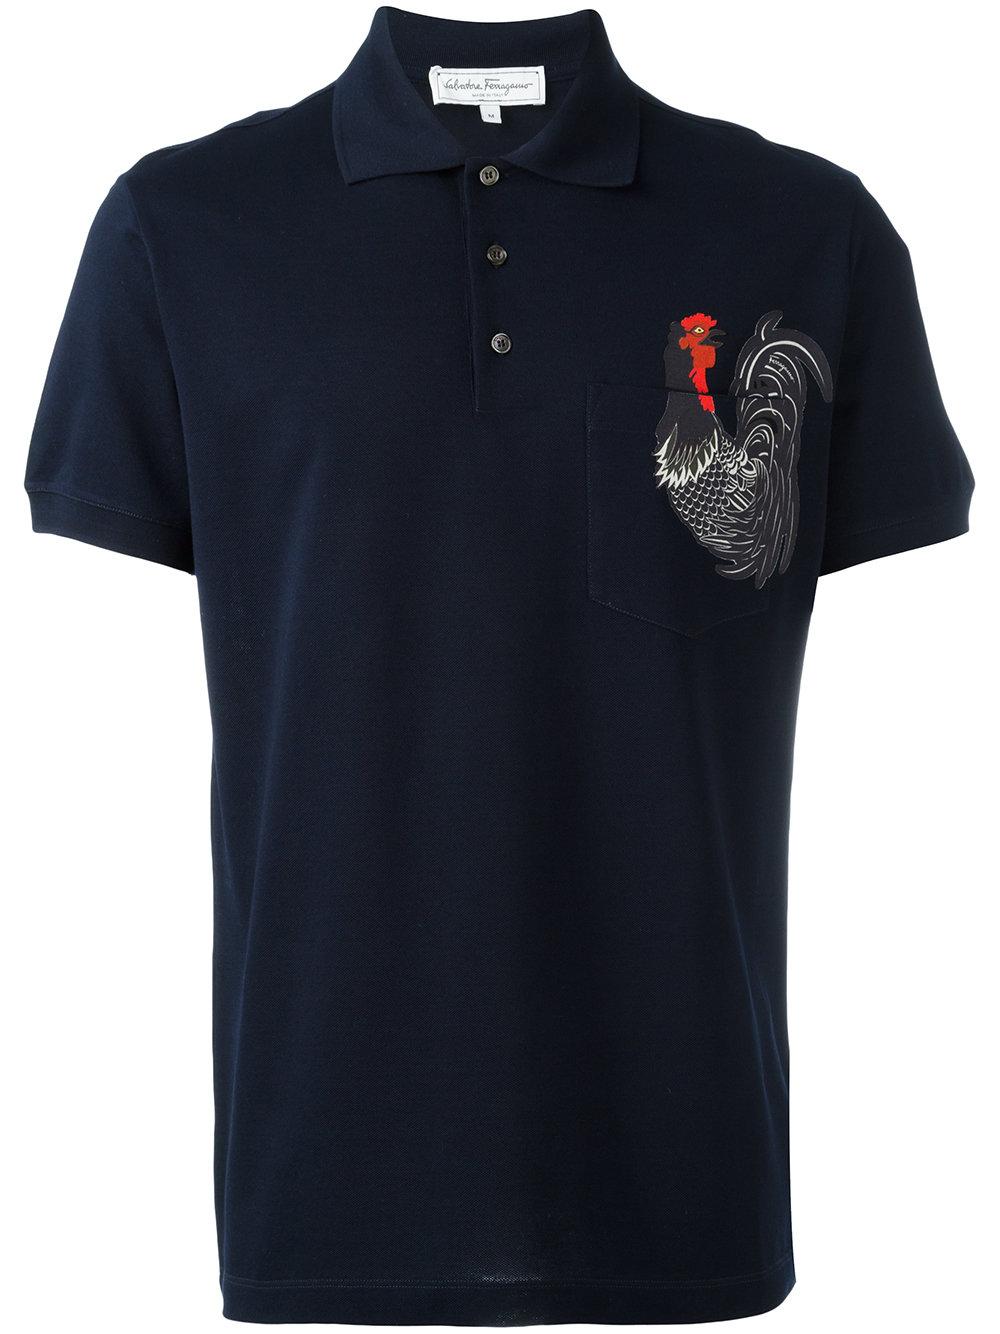 Lyst - Ferragamo Cockerel Polo Shirt in Blue for Men